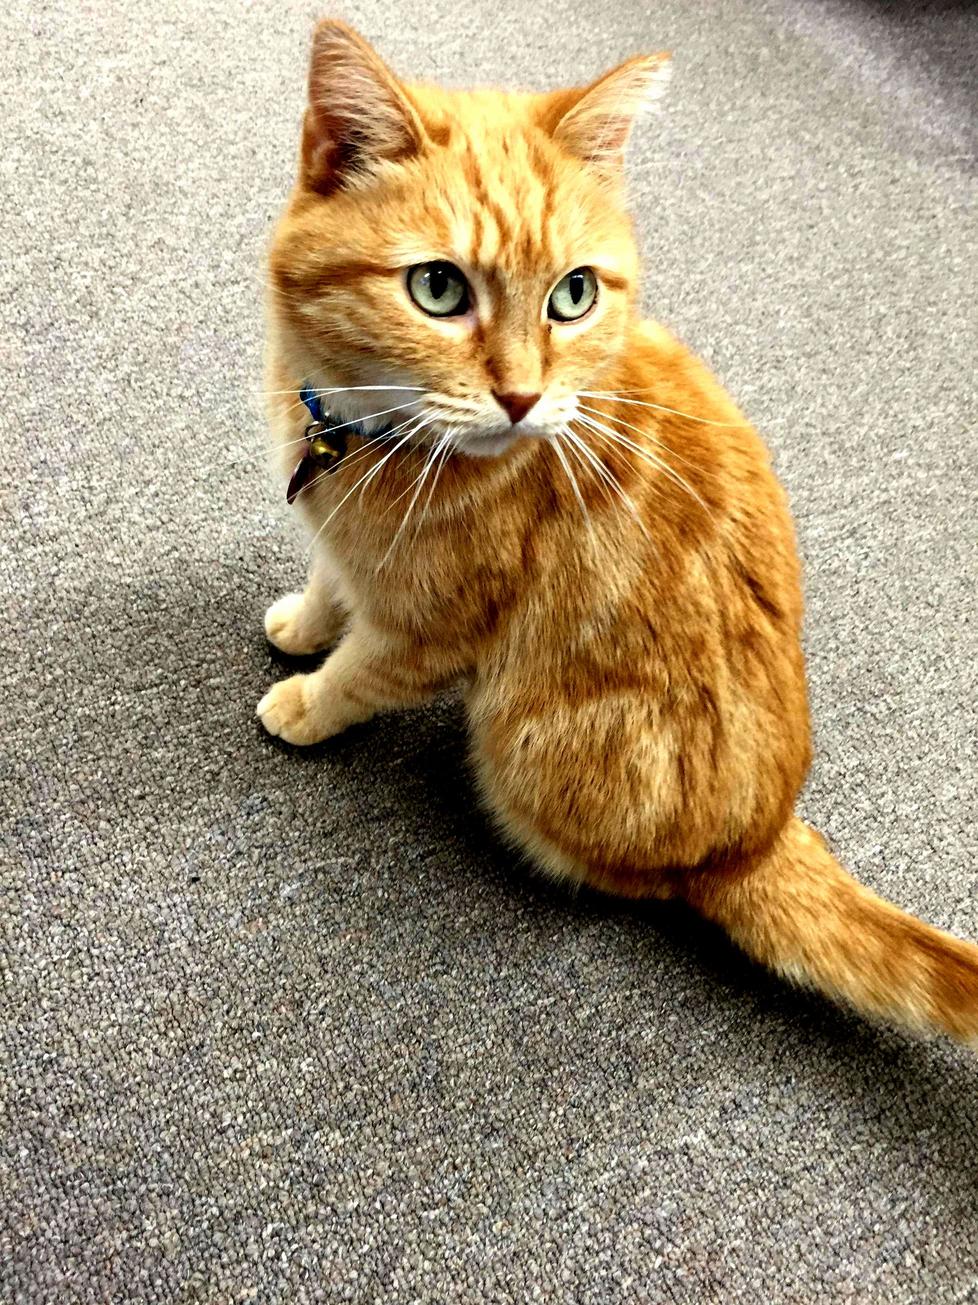 Meet bridget the 3-legged cat who lives at my moms office